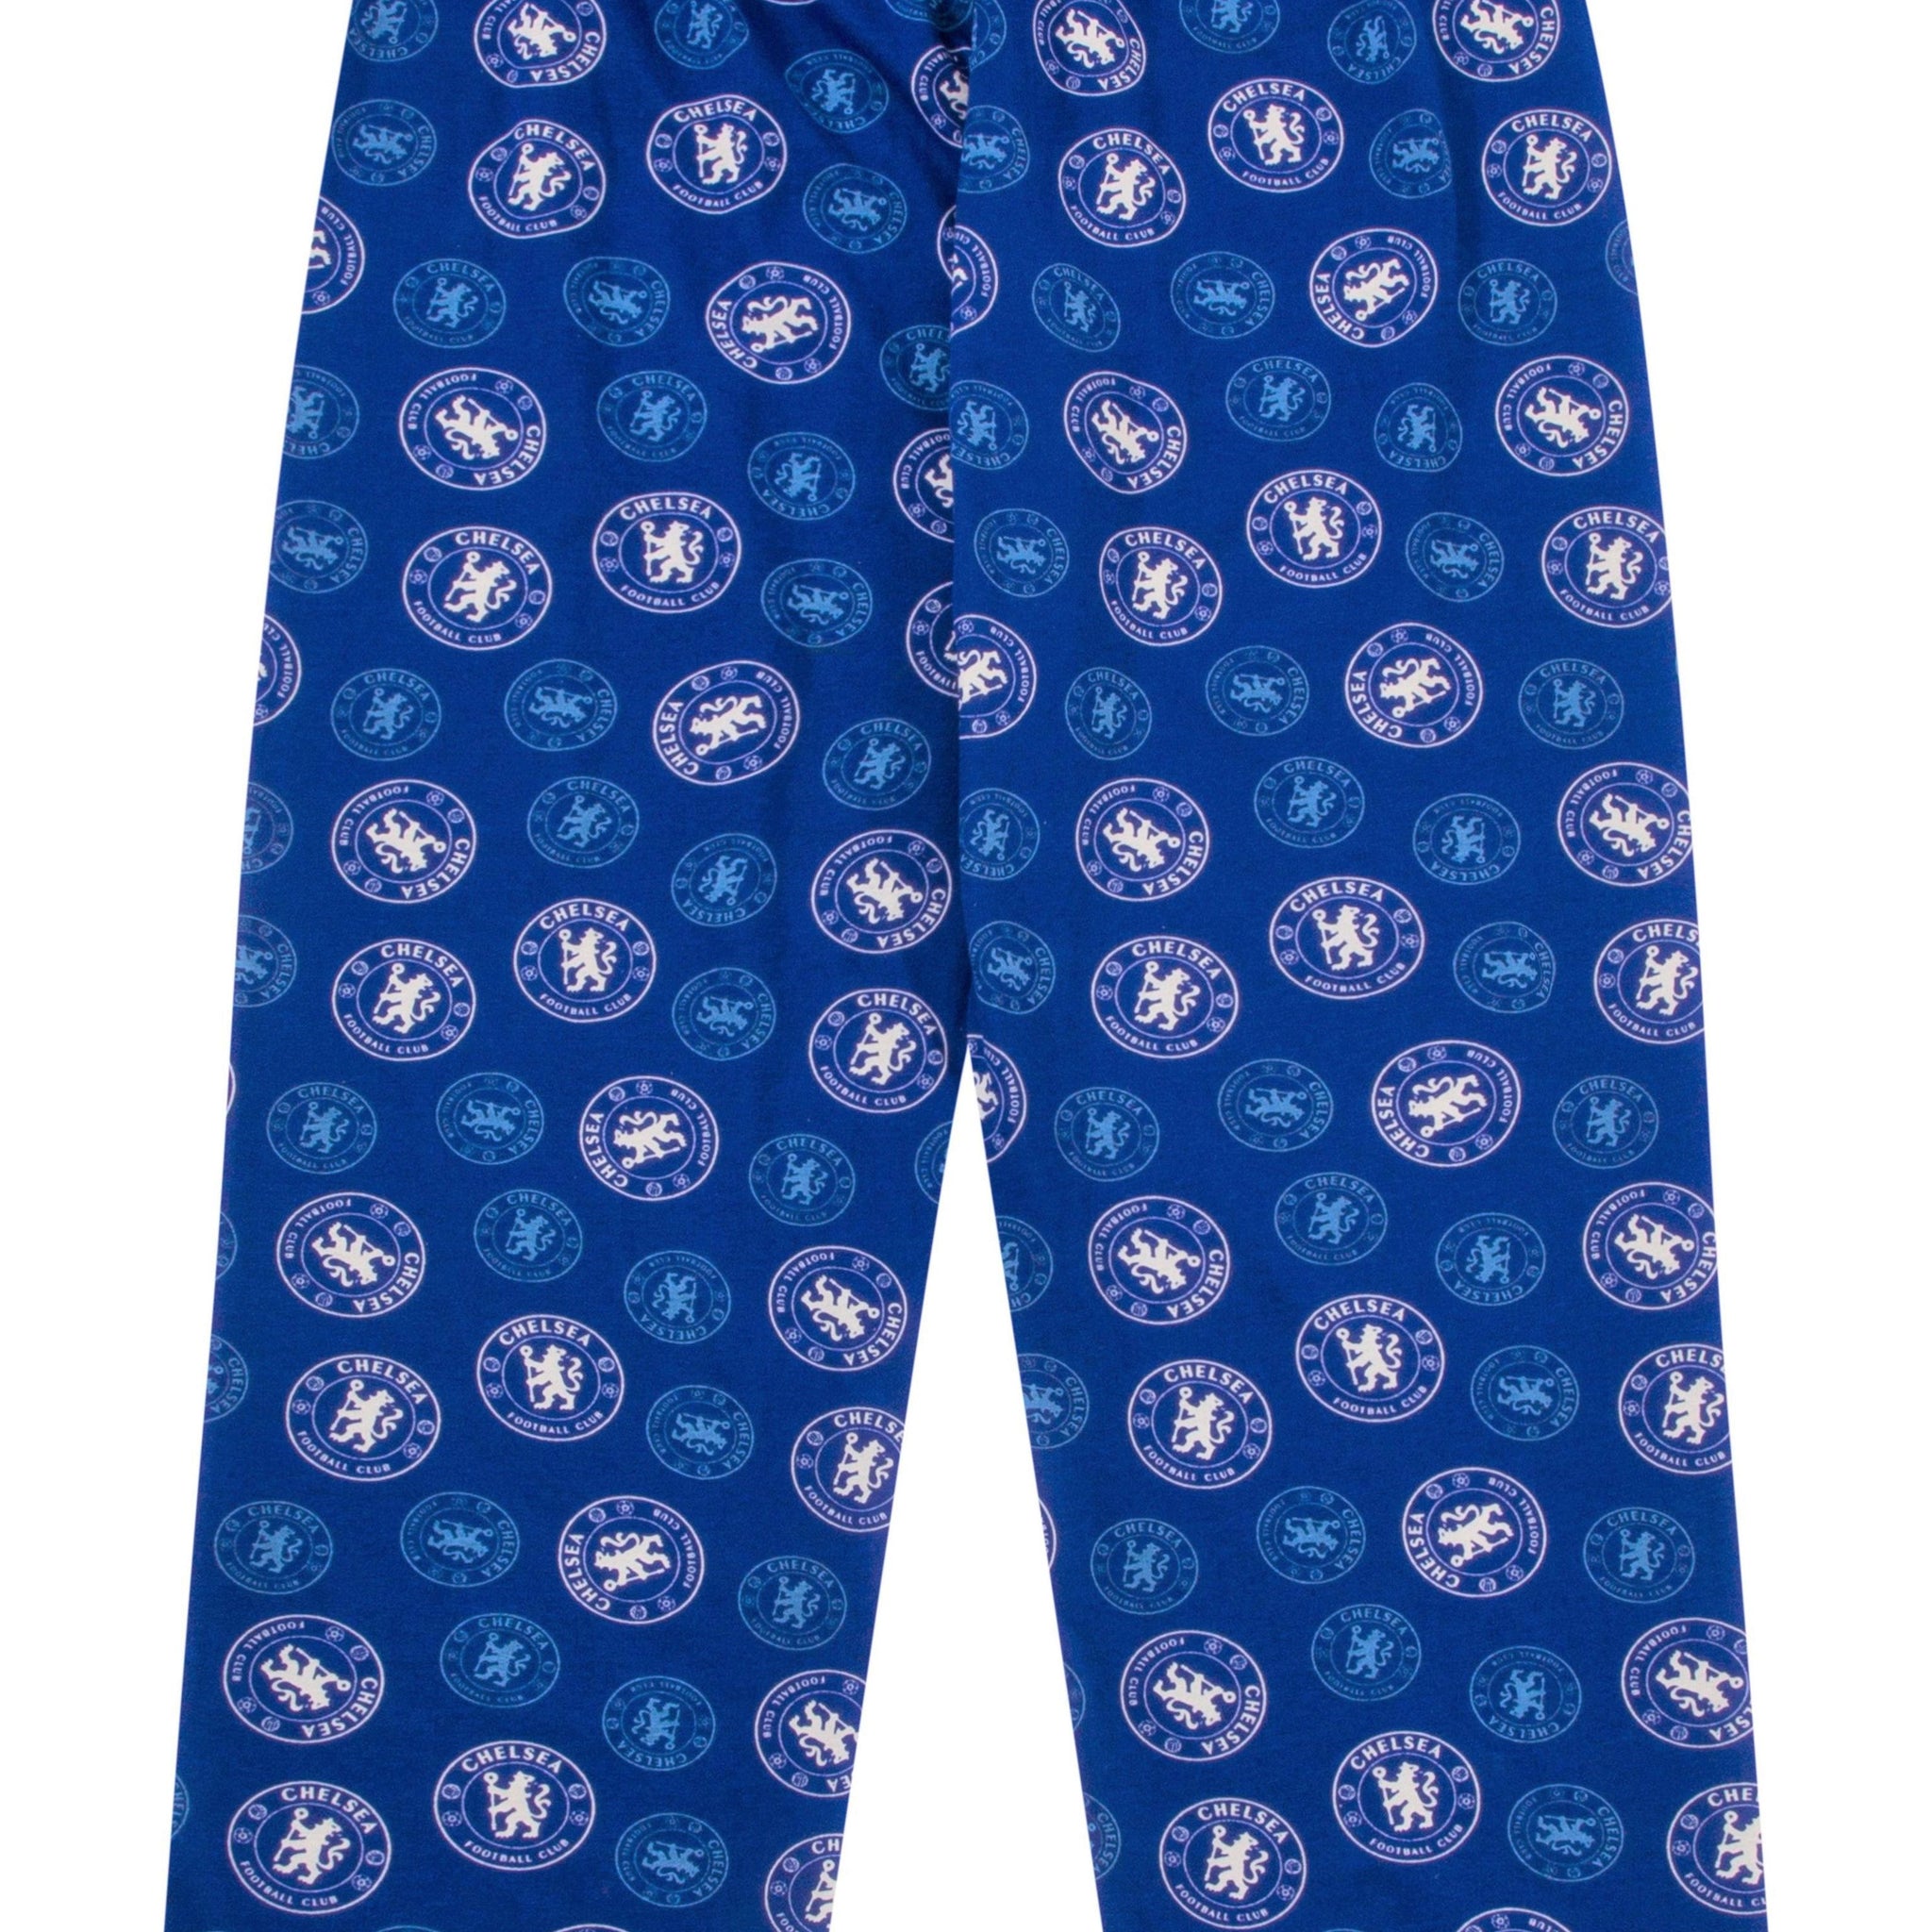 Mens Chelsea FC Lounge Pants - Pyjamas.com